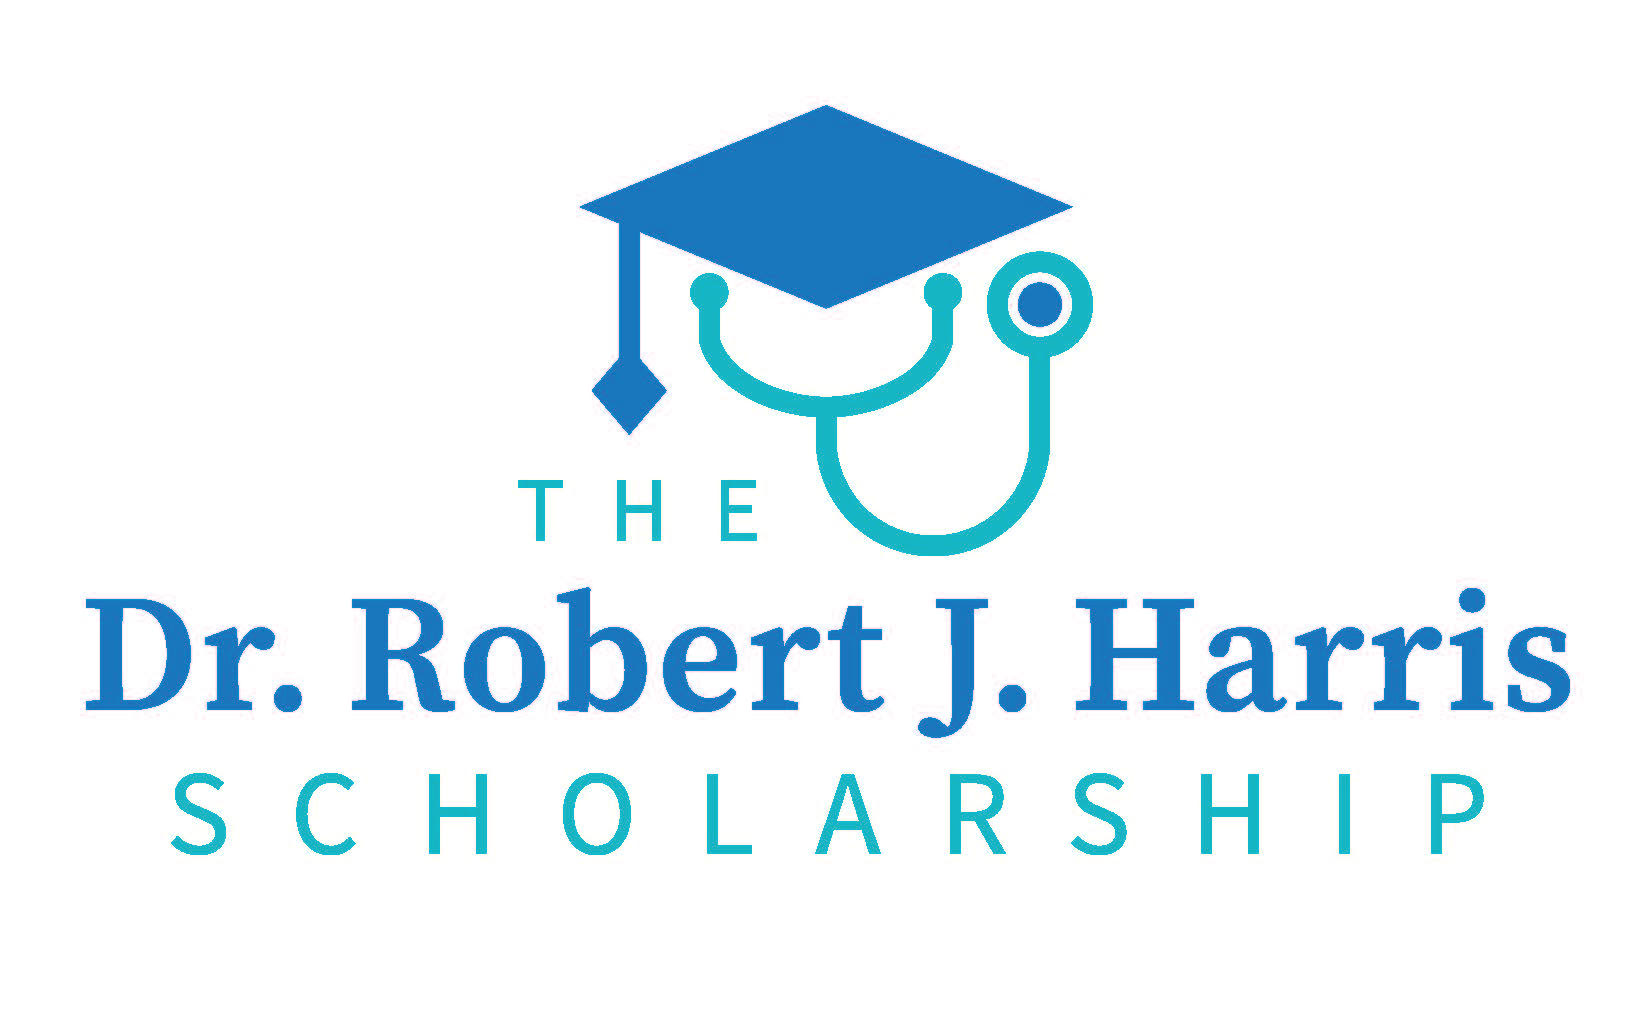 Robert J Harris Scholarship Fund